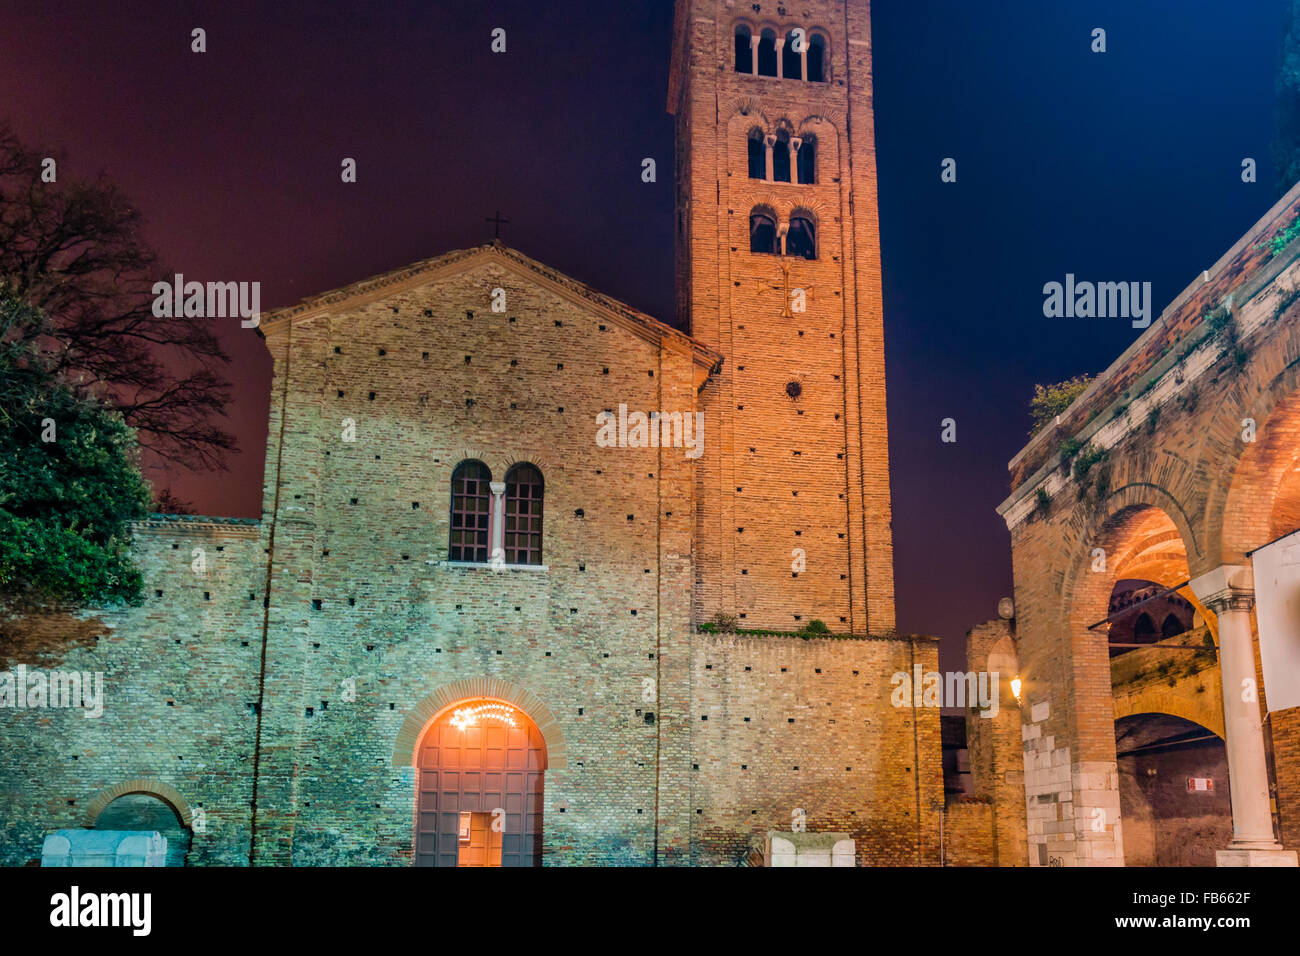 night view of the facade of the Basilica of San Francesco in Ravenna, Italy Stock Photo